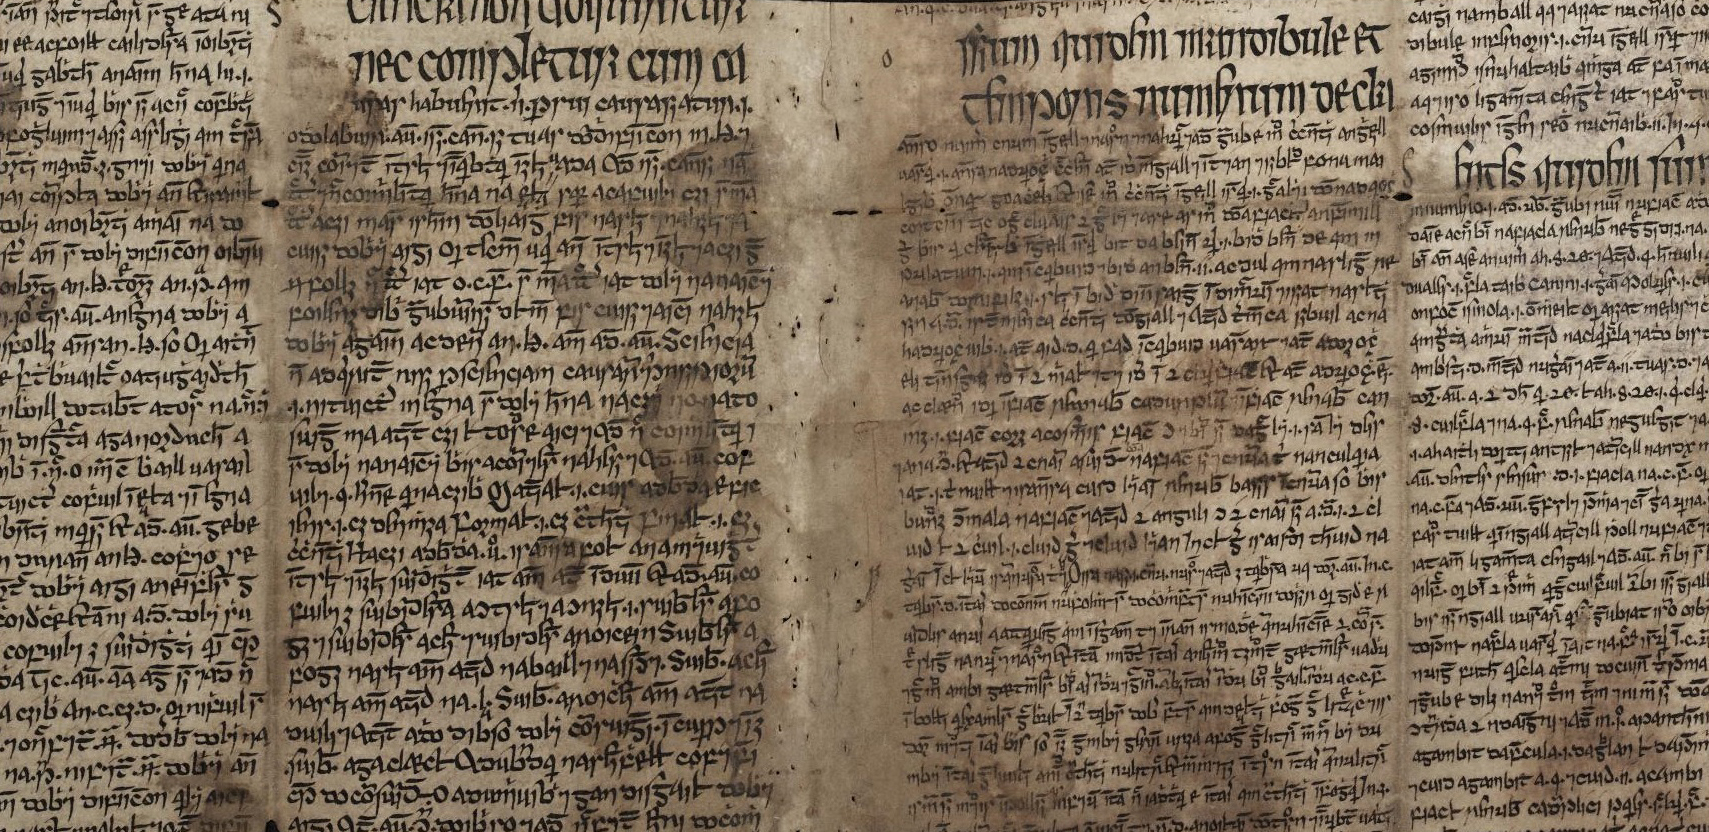 15th-century manuscript reveals links between Gaelic and Islamic worlds